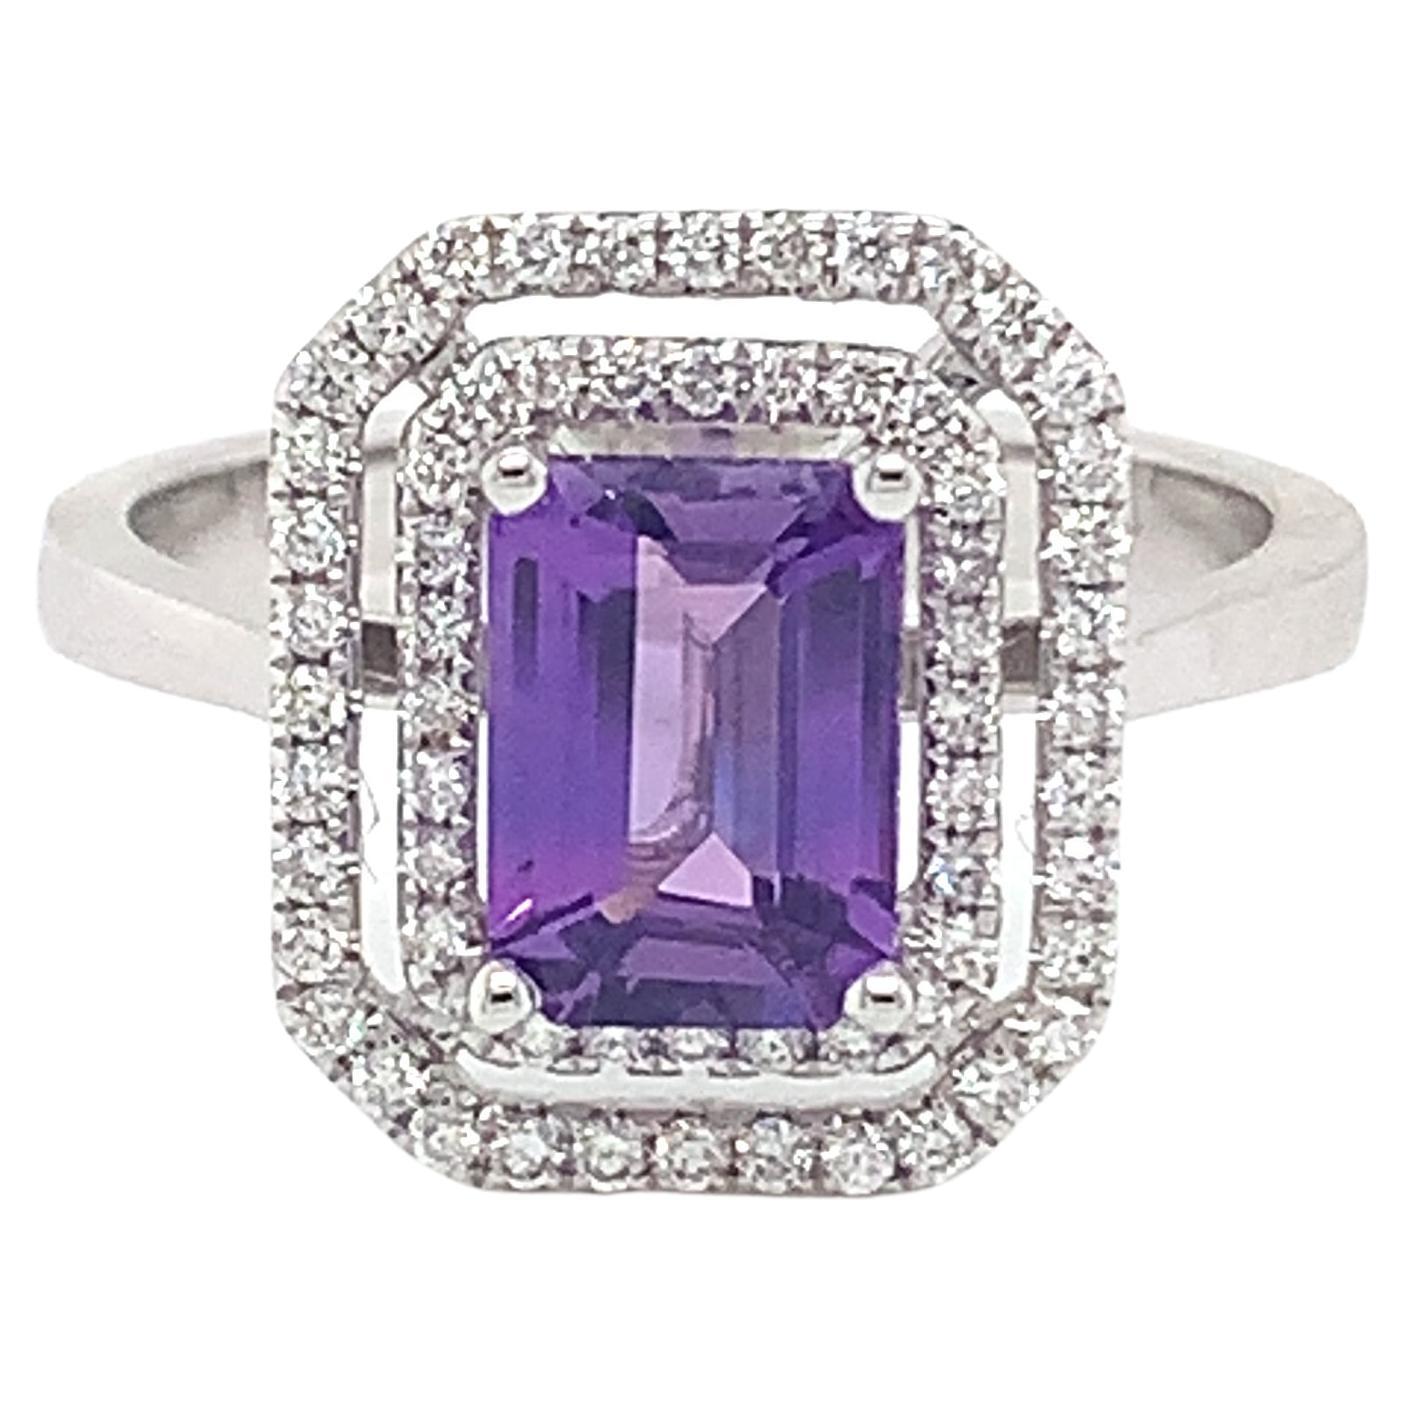 AGL Certified 1.61 Carat No Heat Purple Sapphire & Diamond Ring